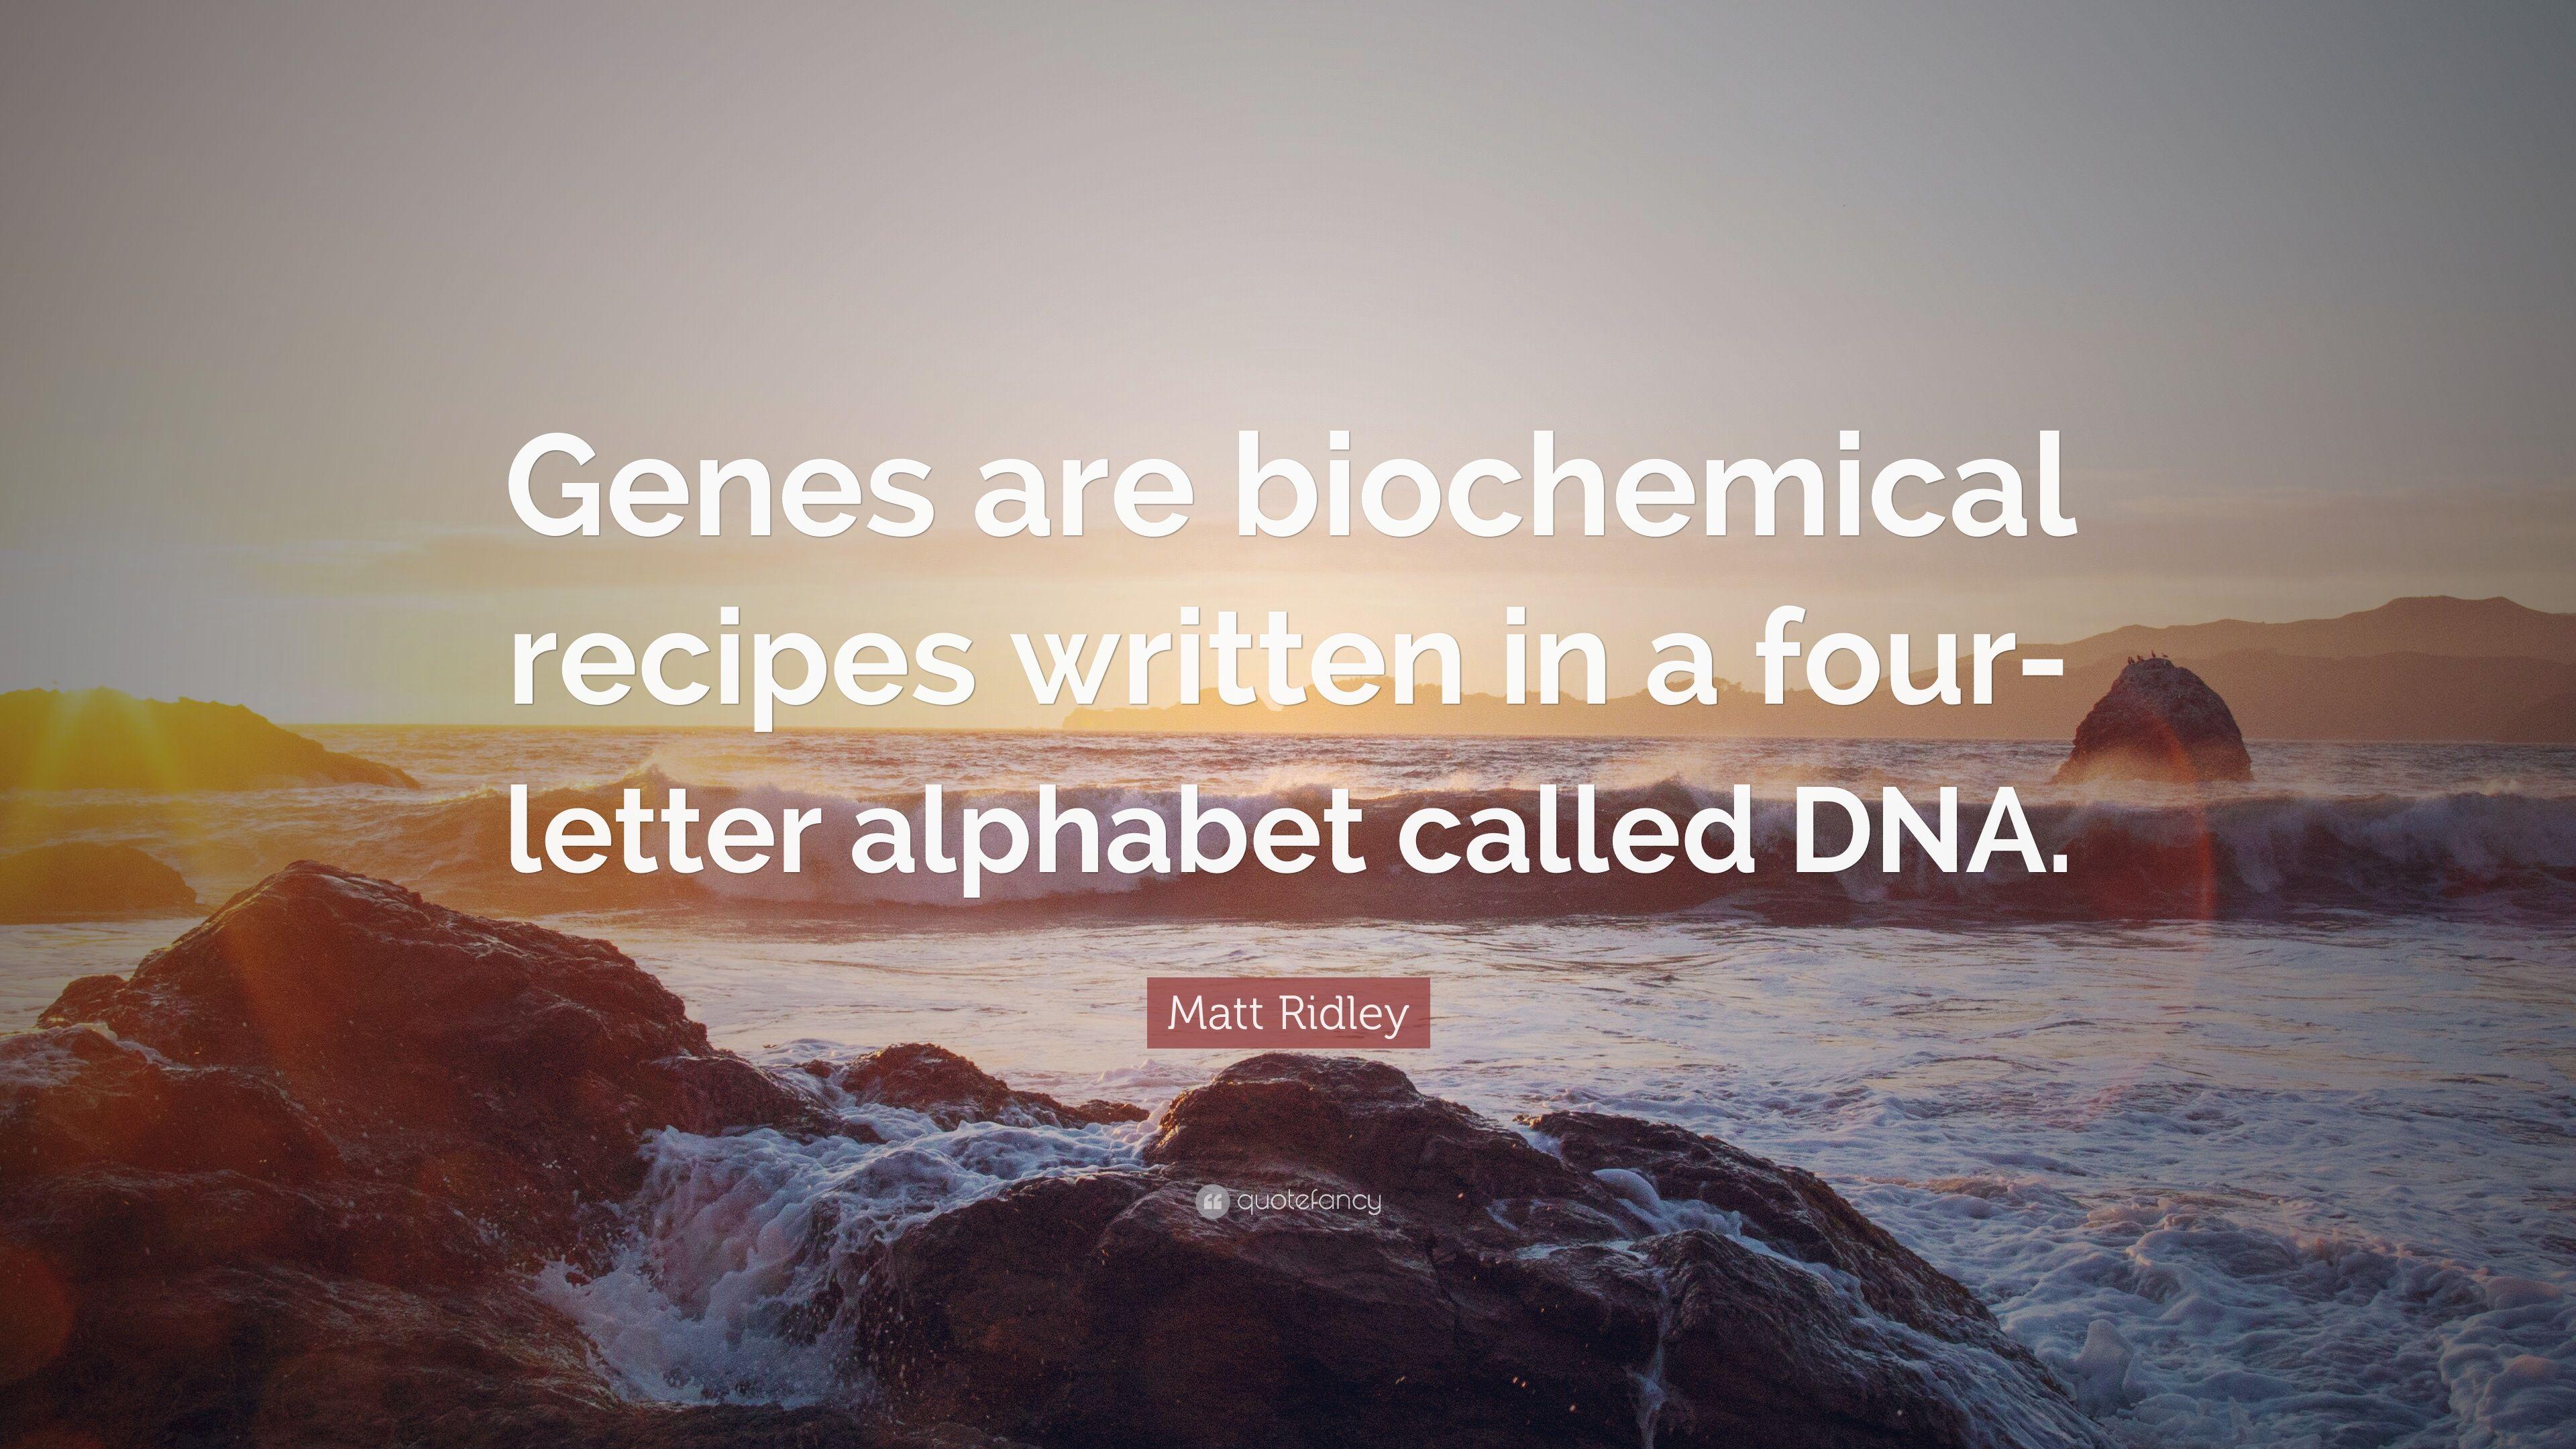 Matt Ridley Quote: “Genes are biochemical recipes written